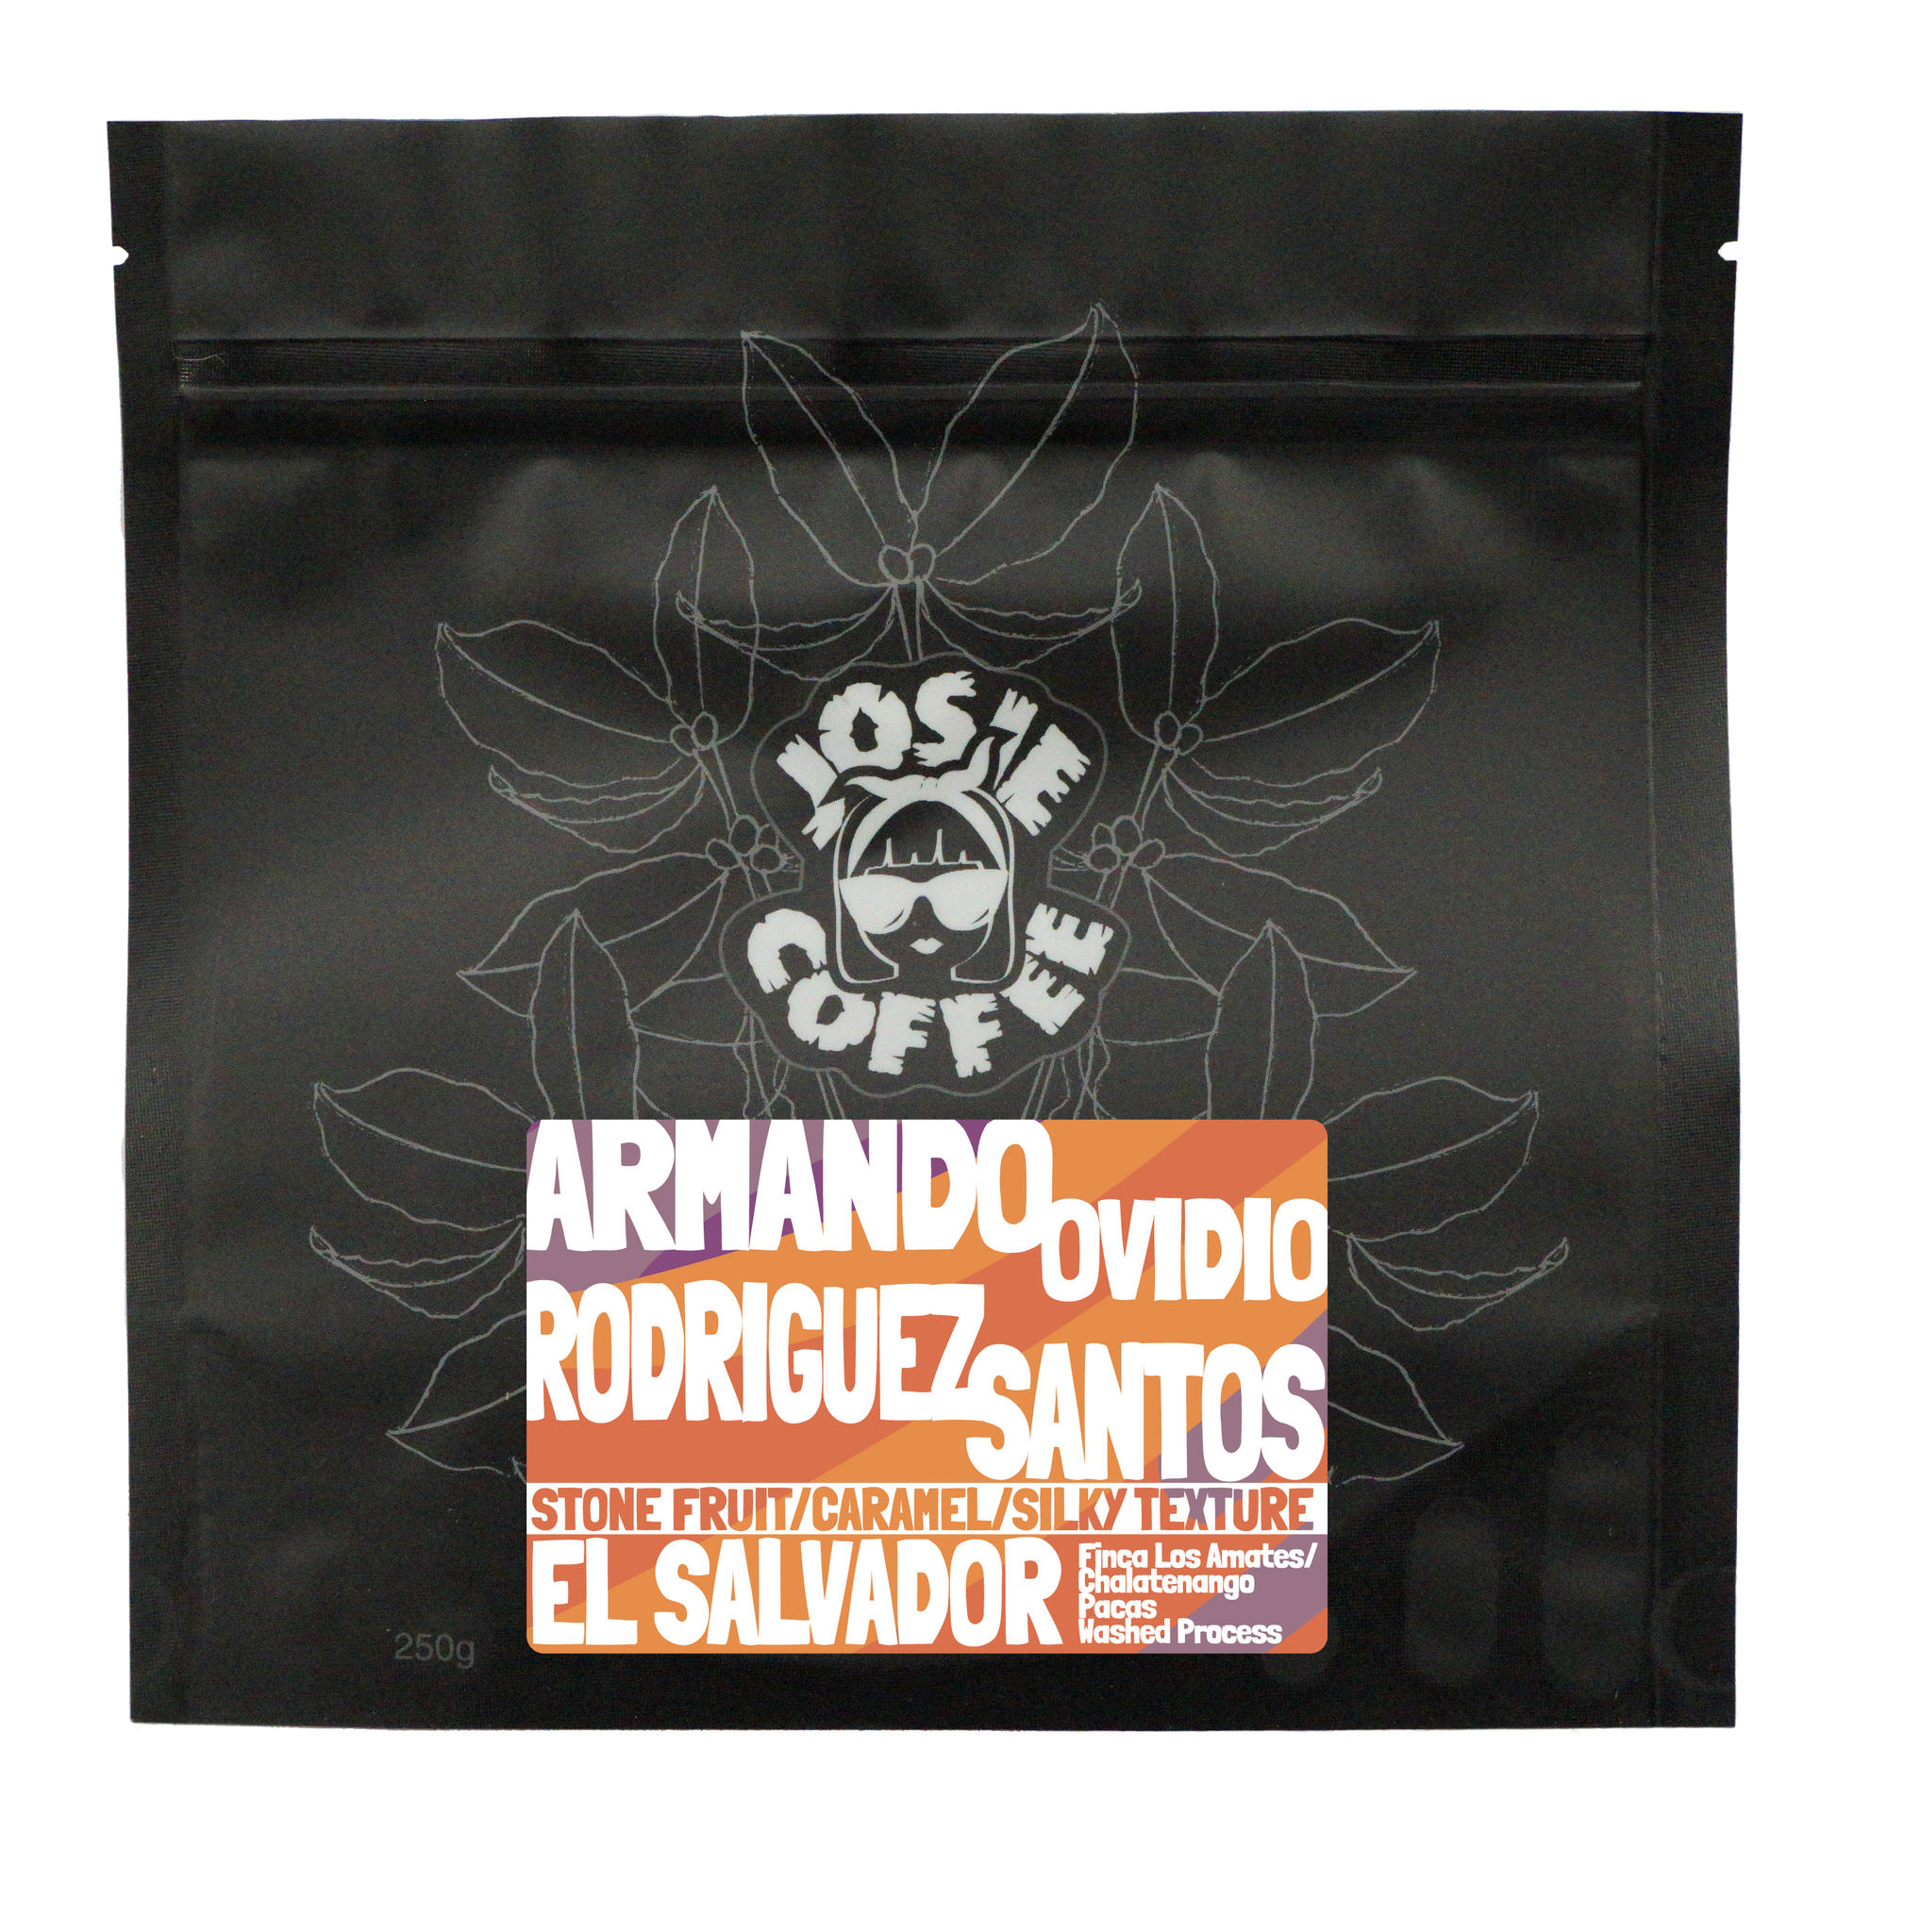 El Salvador - Armando Ovidio Rodriguez AA - Washed